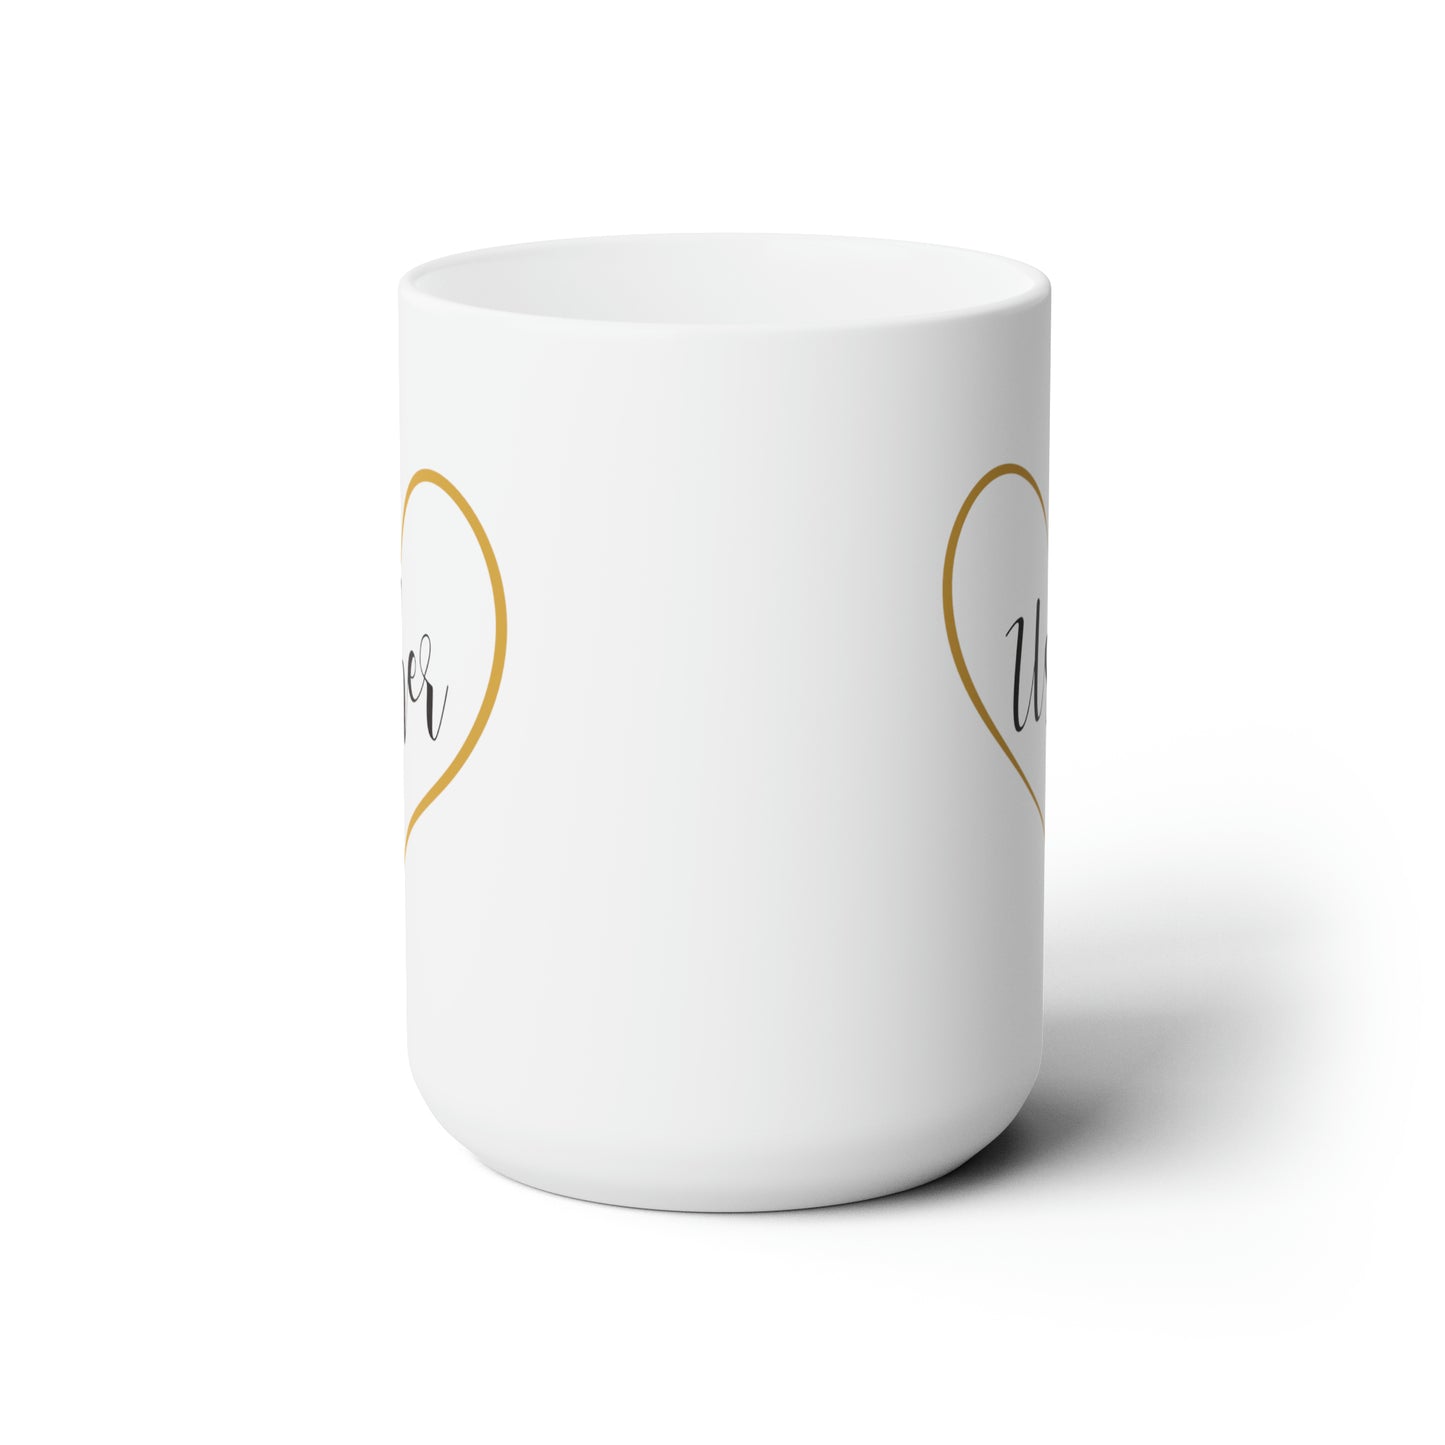 Usher Coffee Mug - Double Sided White Ceramic 15oz - by TheGlassyLass.com